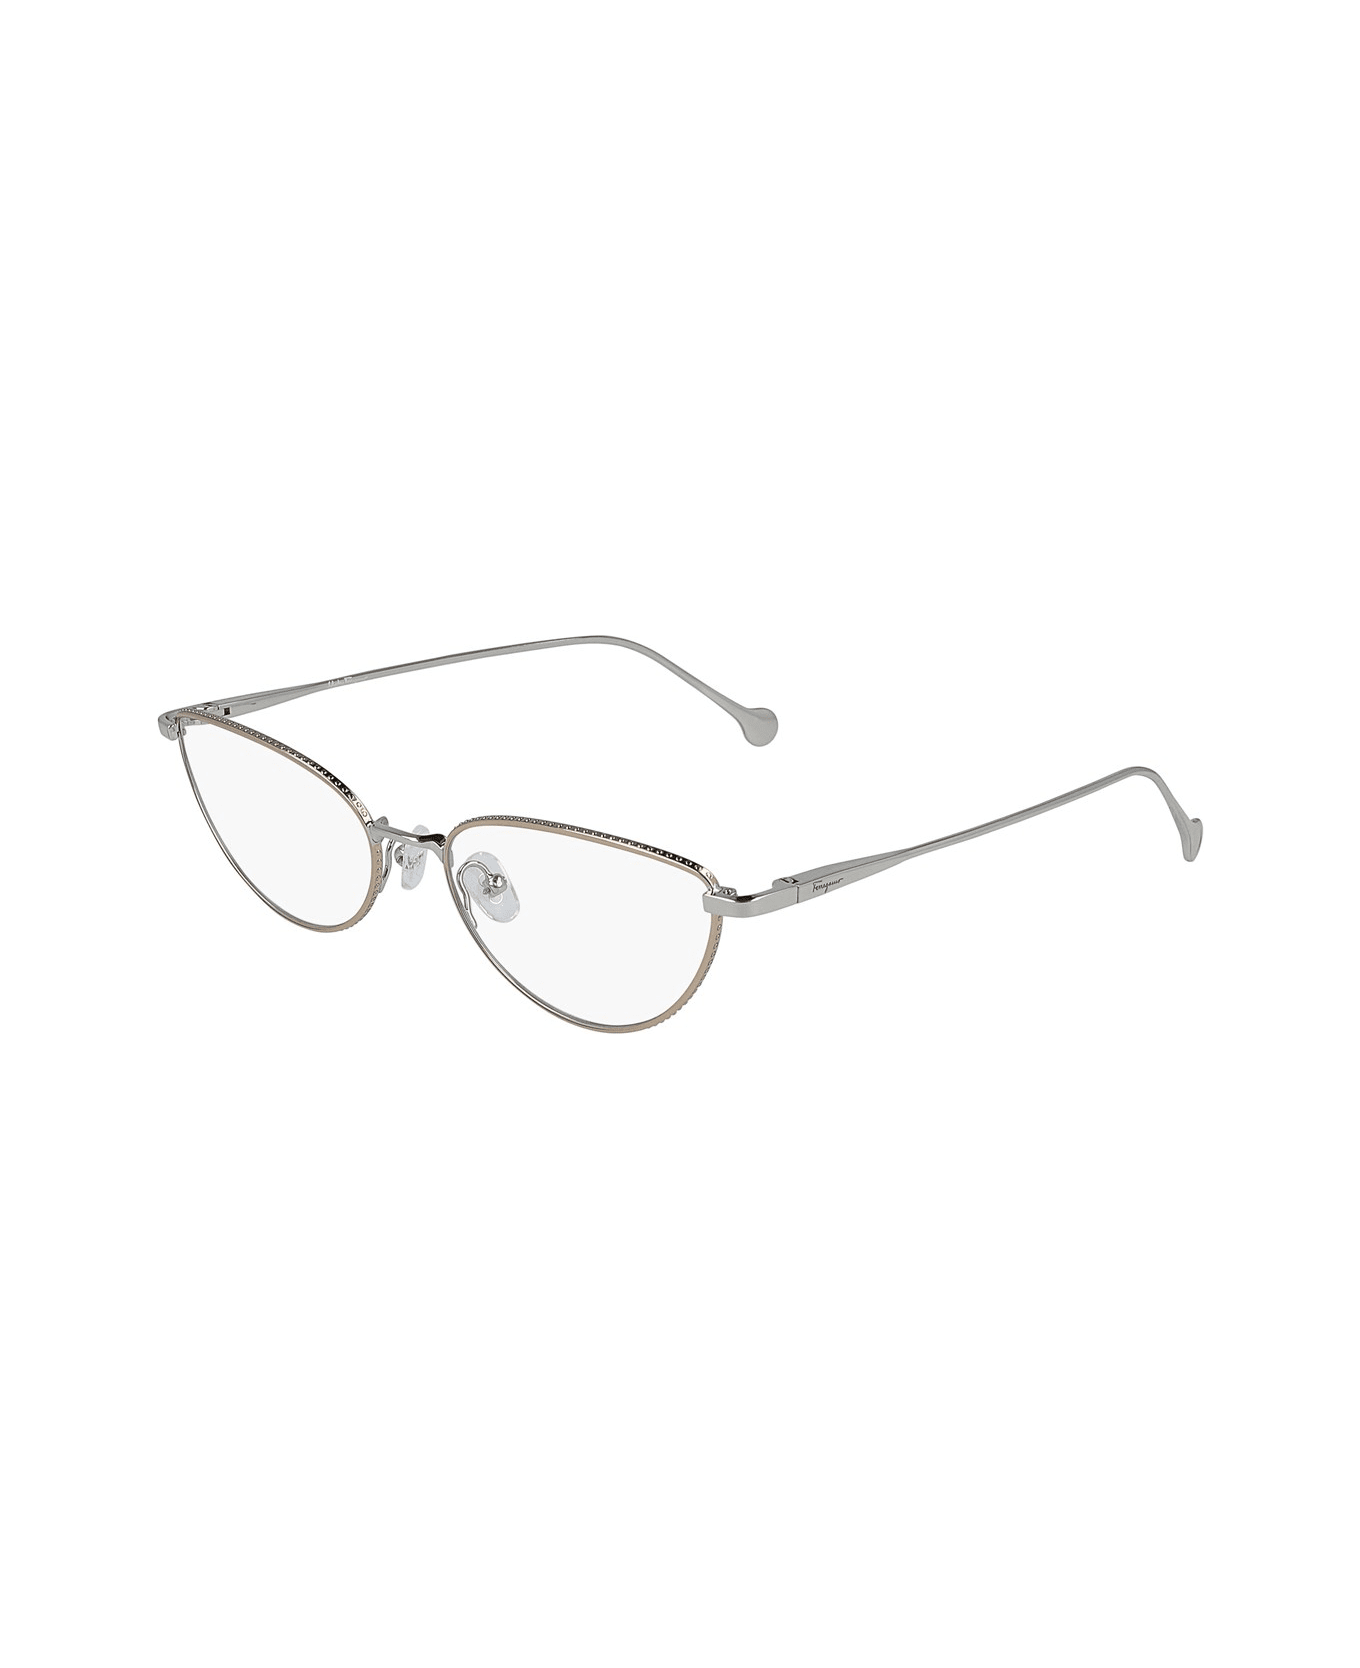 Salvatore Ferragamo Eyewear Sf2188 Glasses - Oro アイウェア